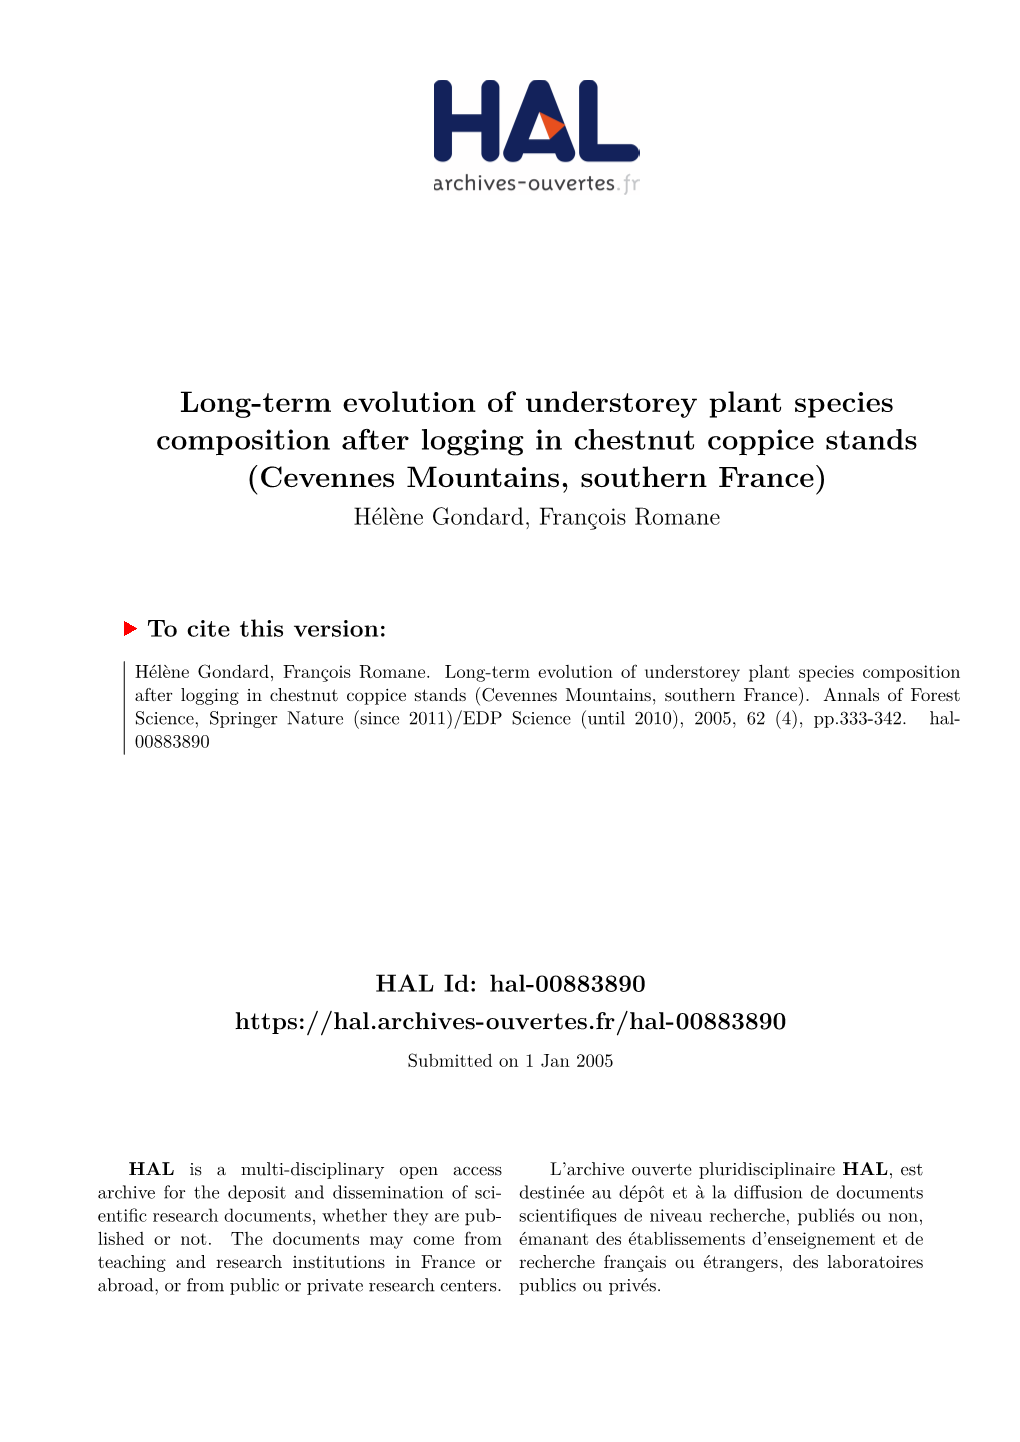 Long-Term Evolution of Understorey Plant Species Composition After